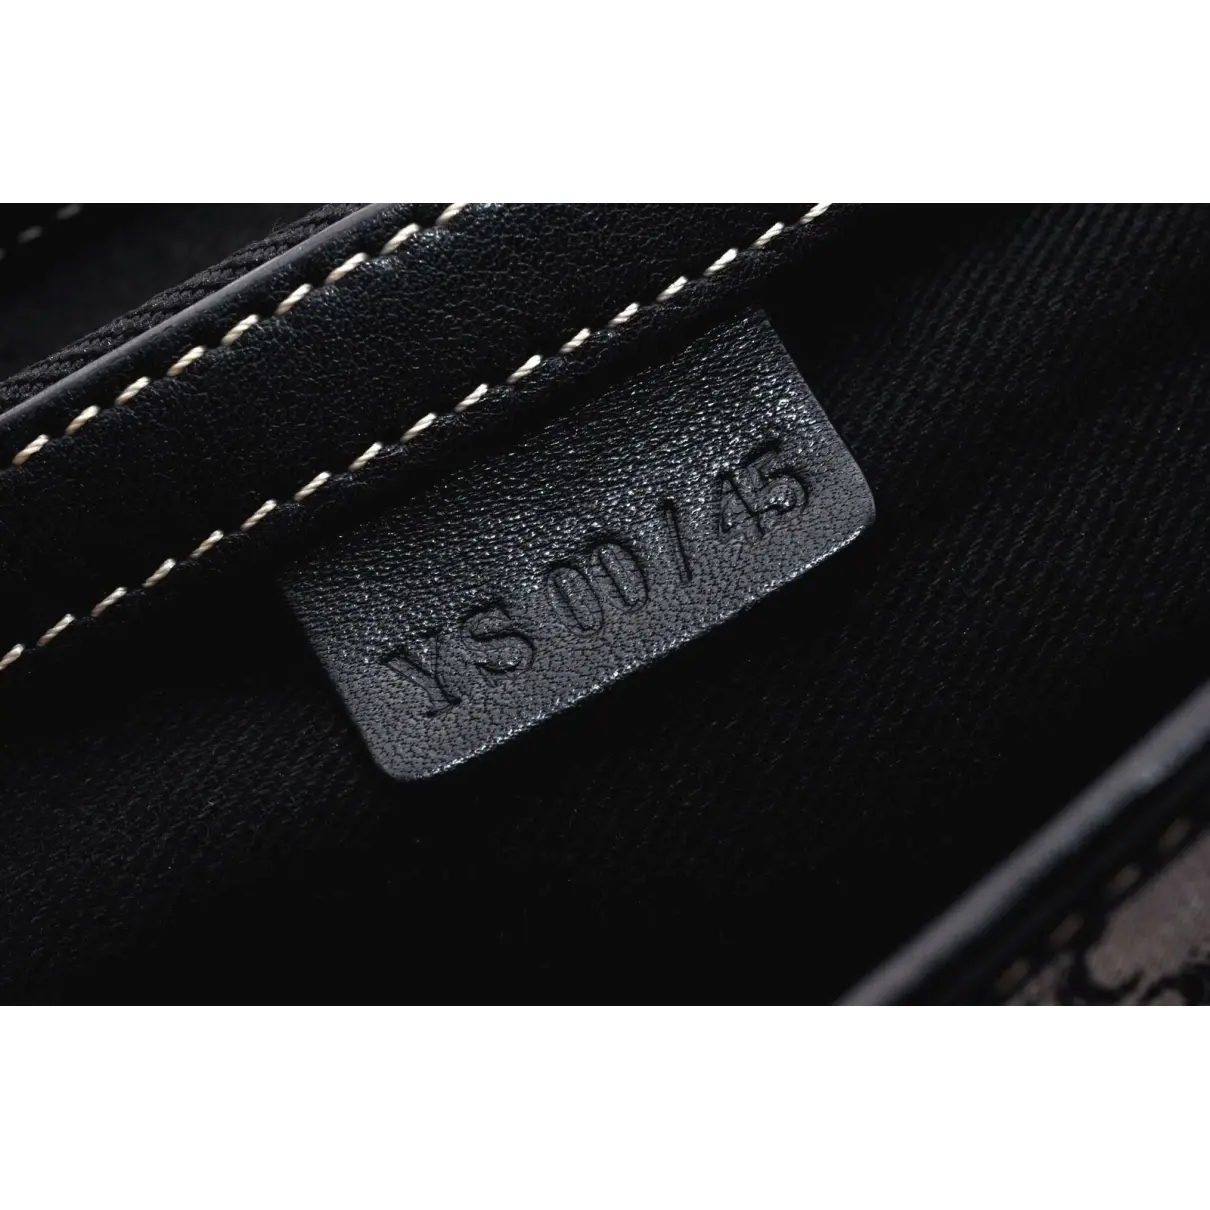 Buy Celine Boogie leather handbag online